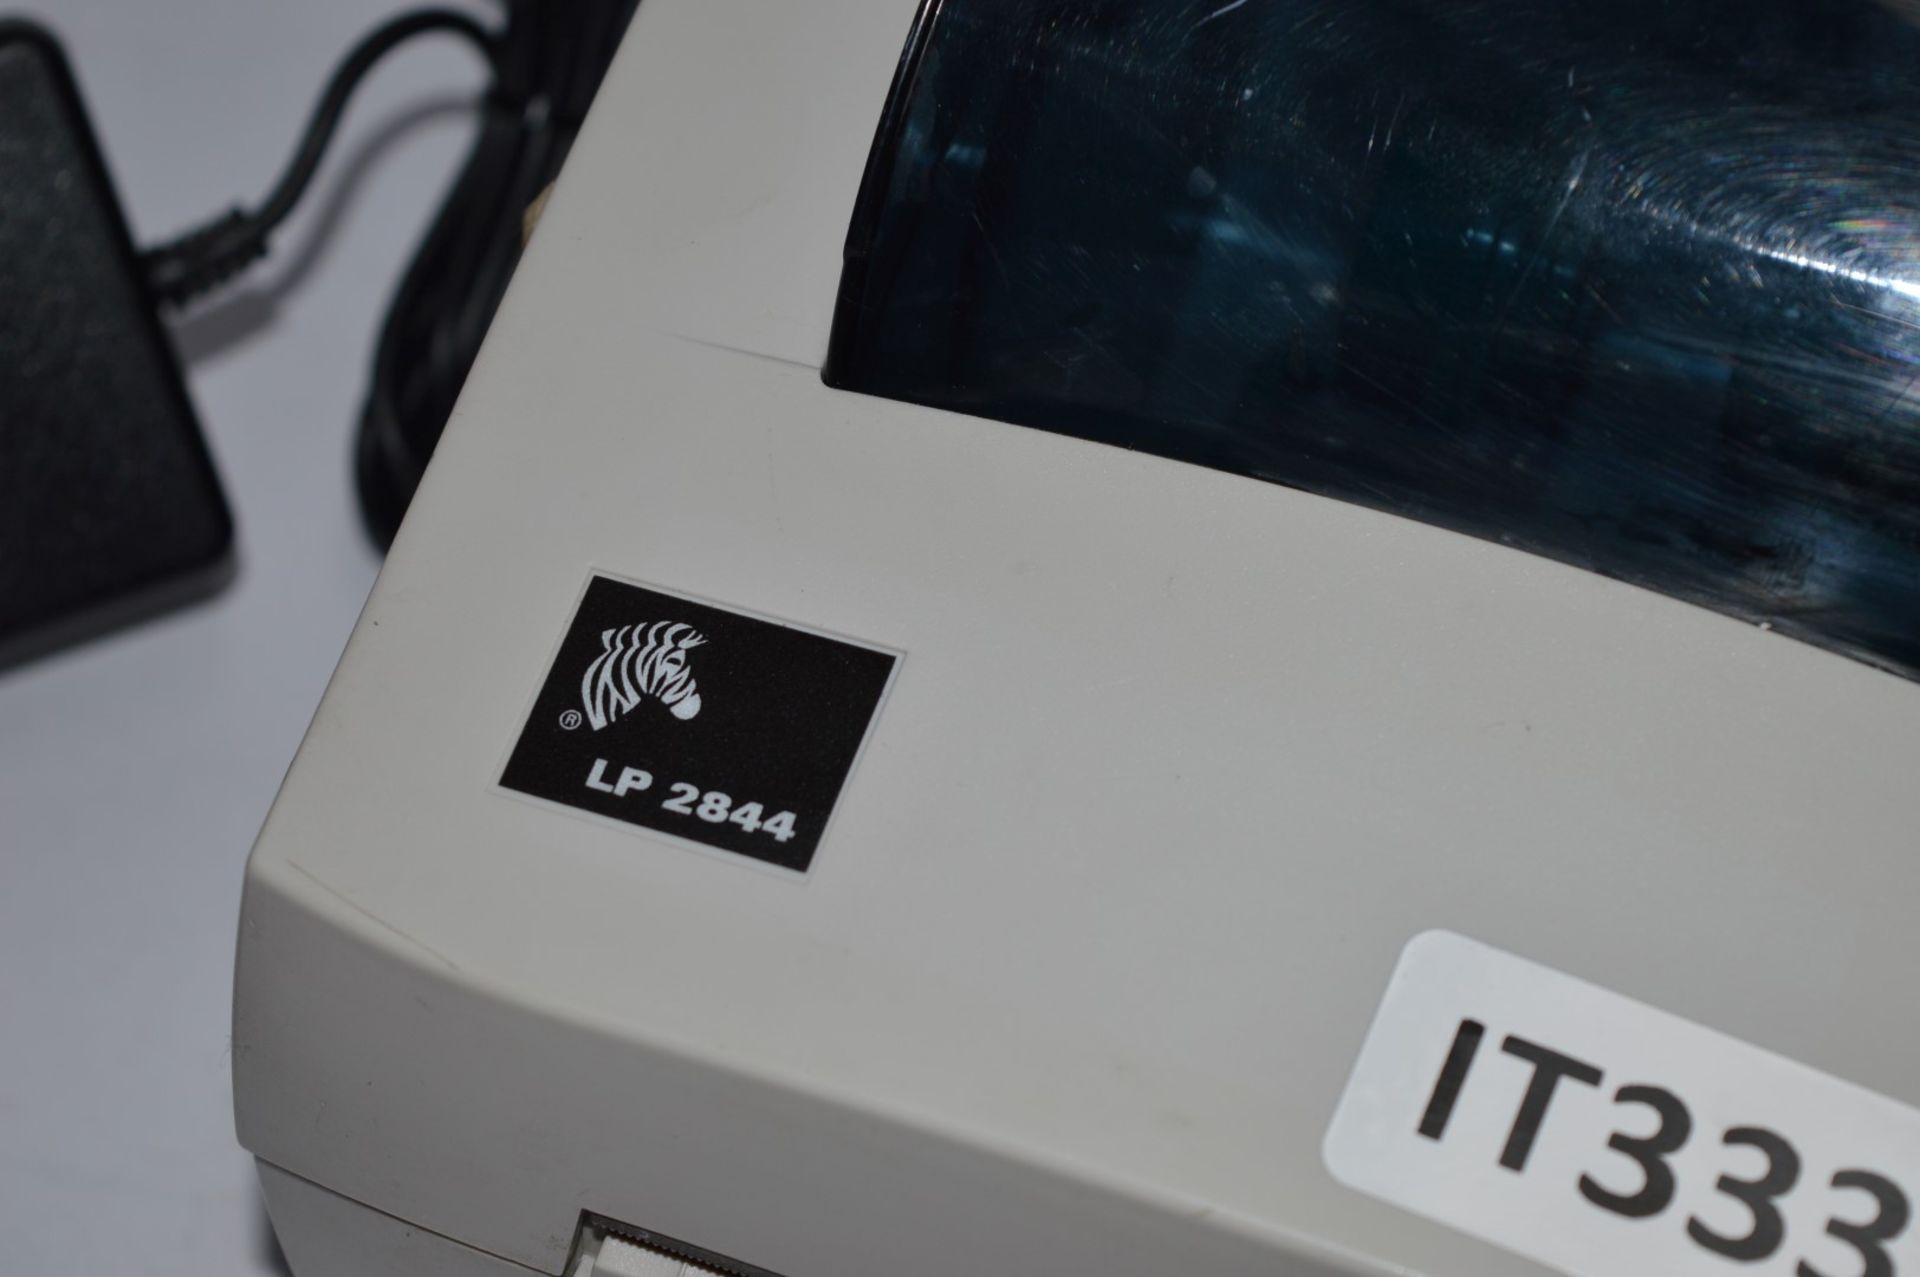 1 x Zebra LP2844 Direct Thermal Label Printer - CL011 - Ref IT333 - Location: Altrincham WA14 - - Image 3 of 6